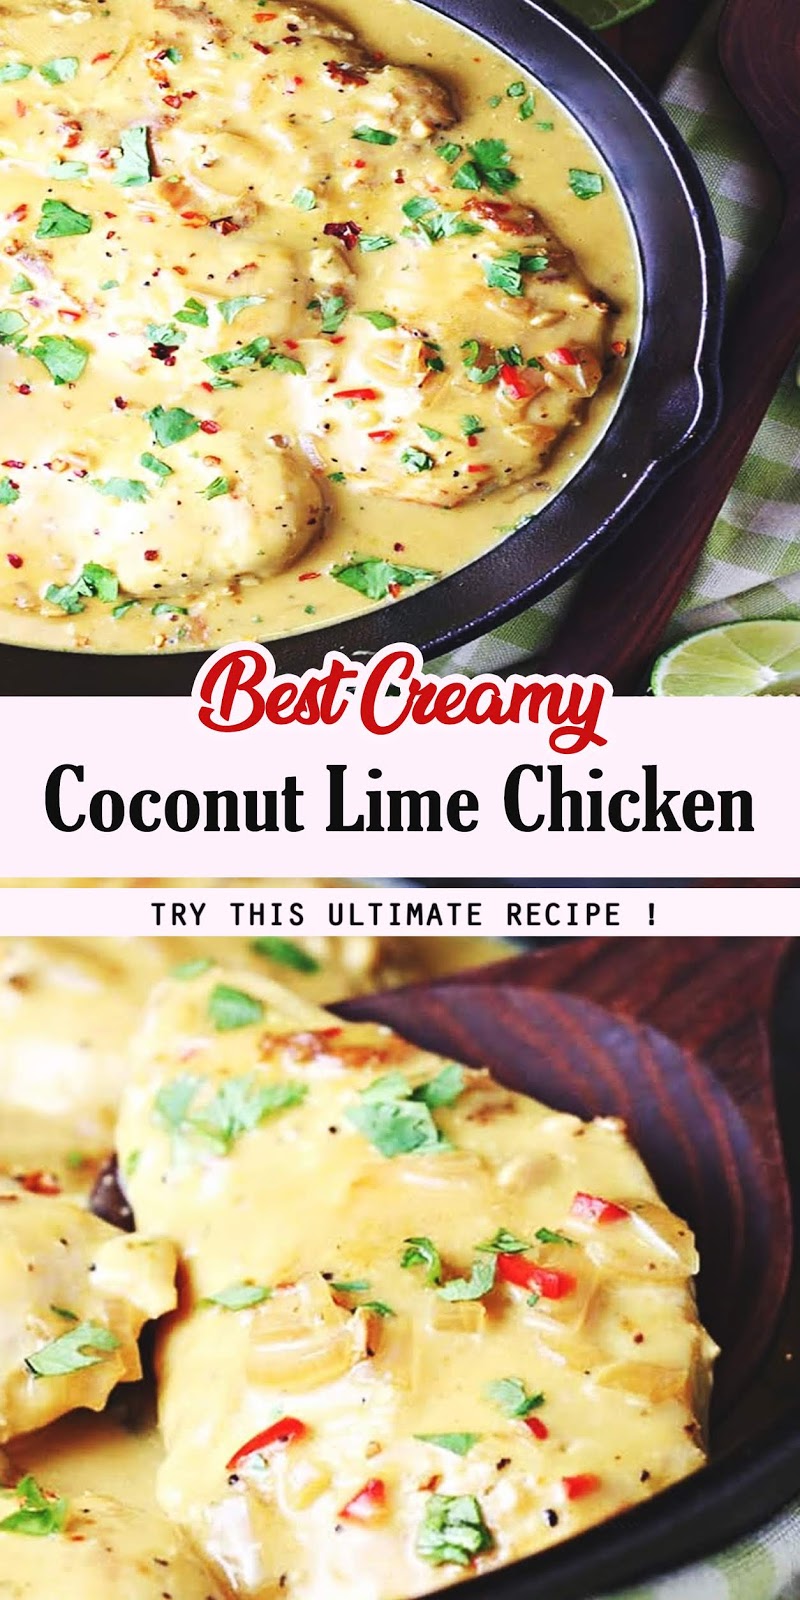 Best Creamy Coconut Lime Chicken - 3 SECONDS